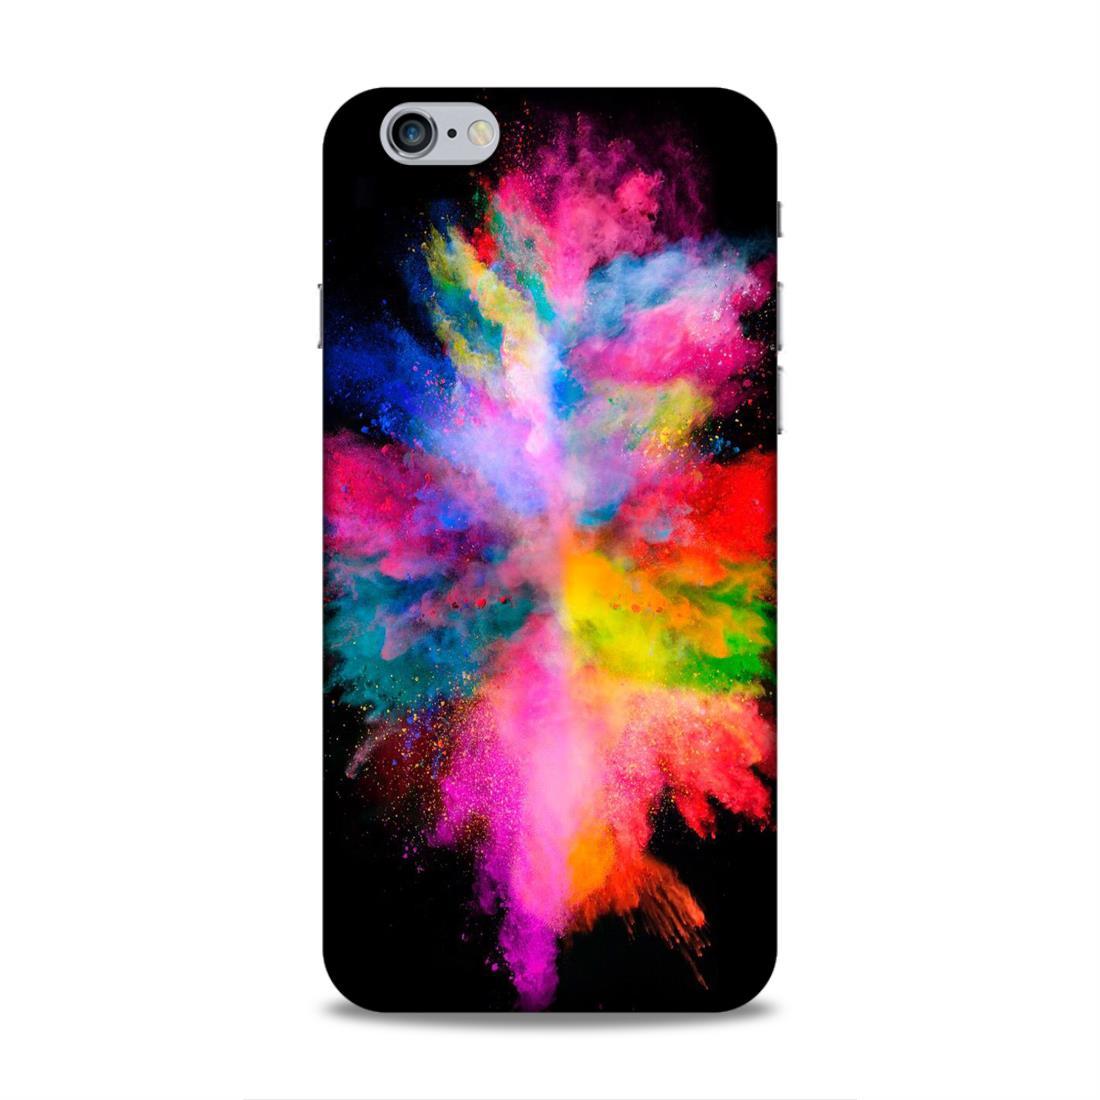 Colour Bomb iPhone 6 Plus Mobile Case Cover